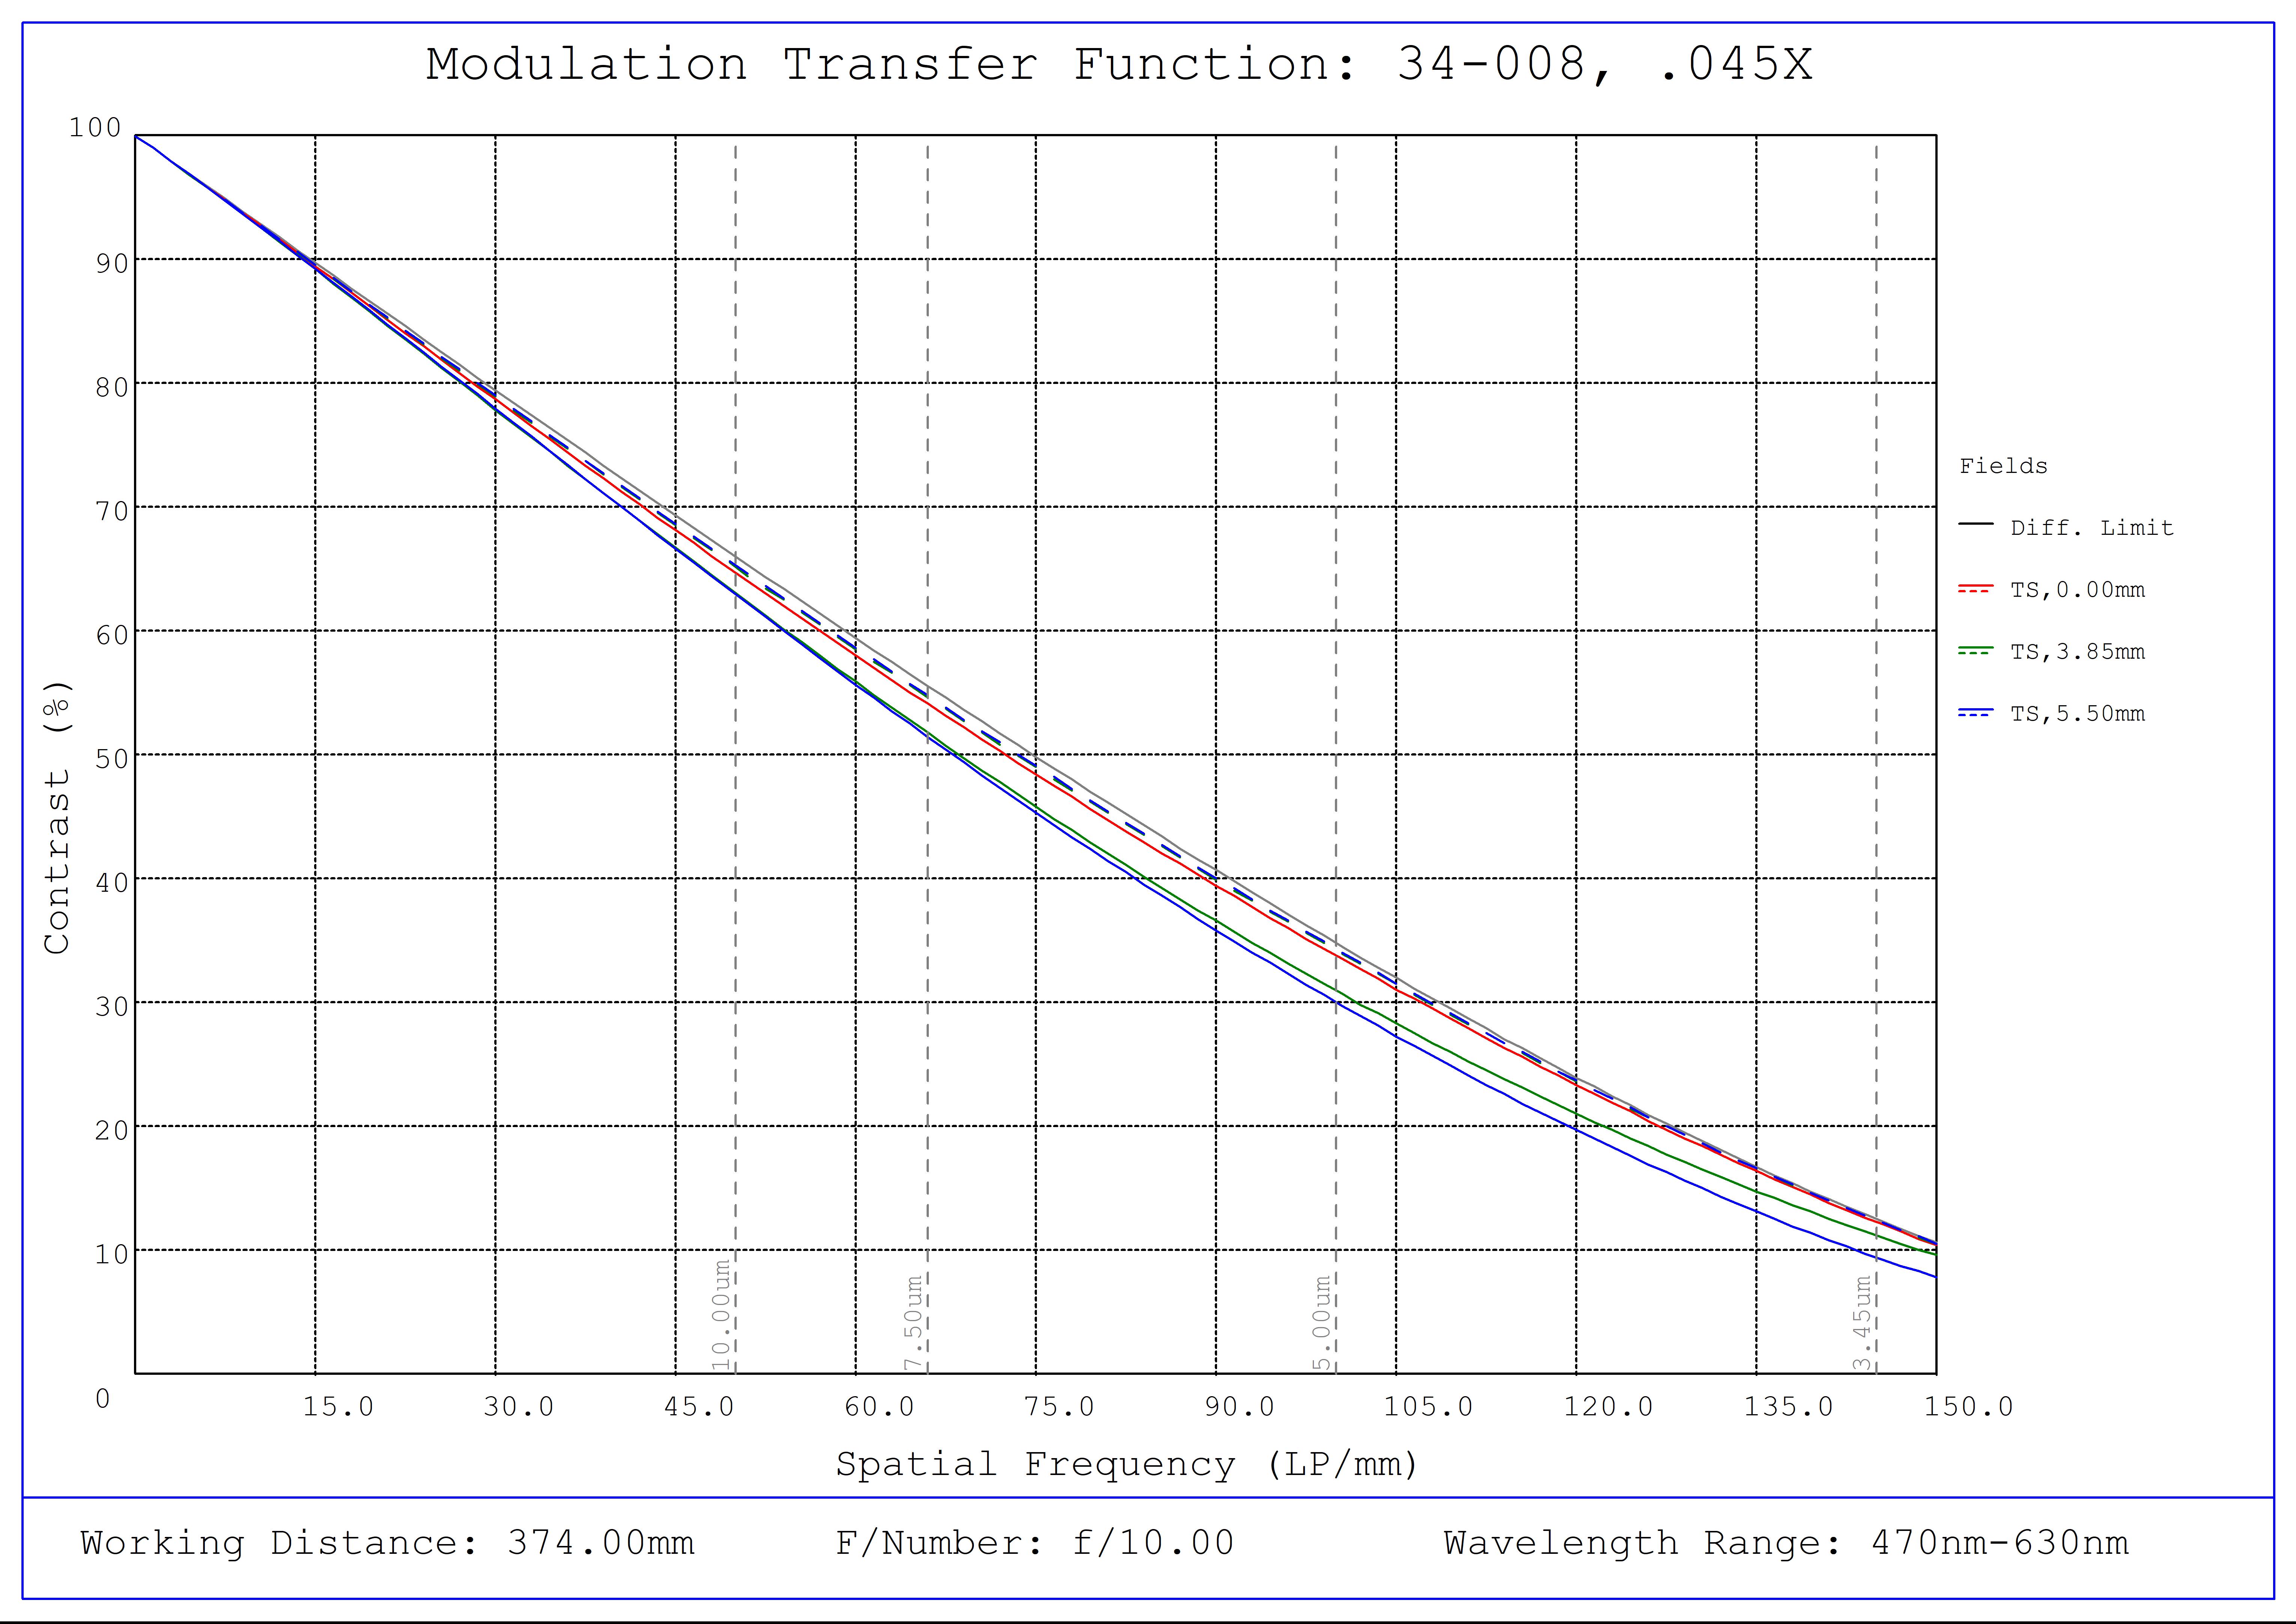 #34-008, 0.045X, 2/3" C-Mount TitanTL® Telecentric Lens, Modulated Transfer Function (MTF) Plot, 374mm Working Distance, f10